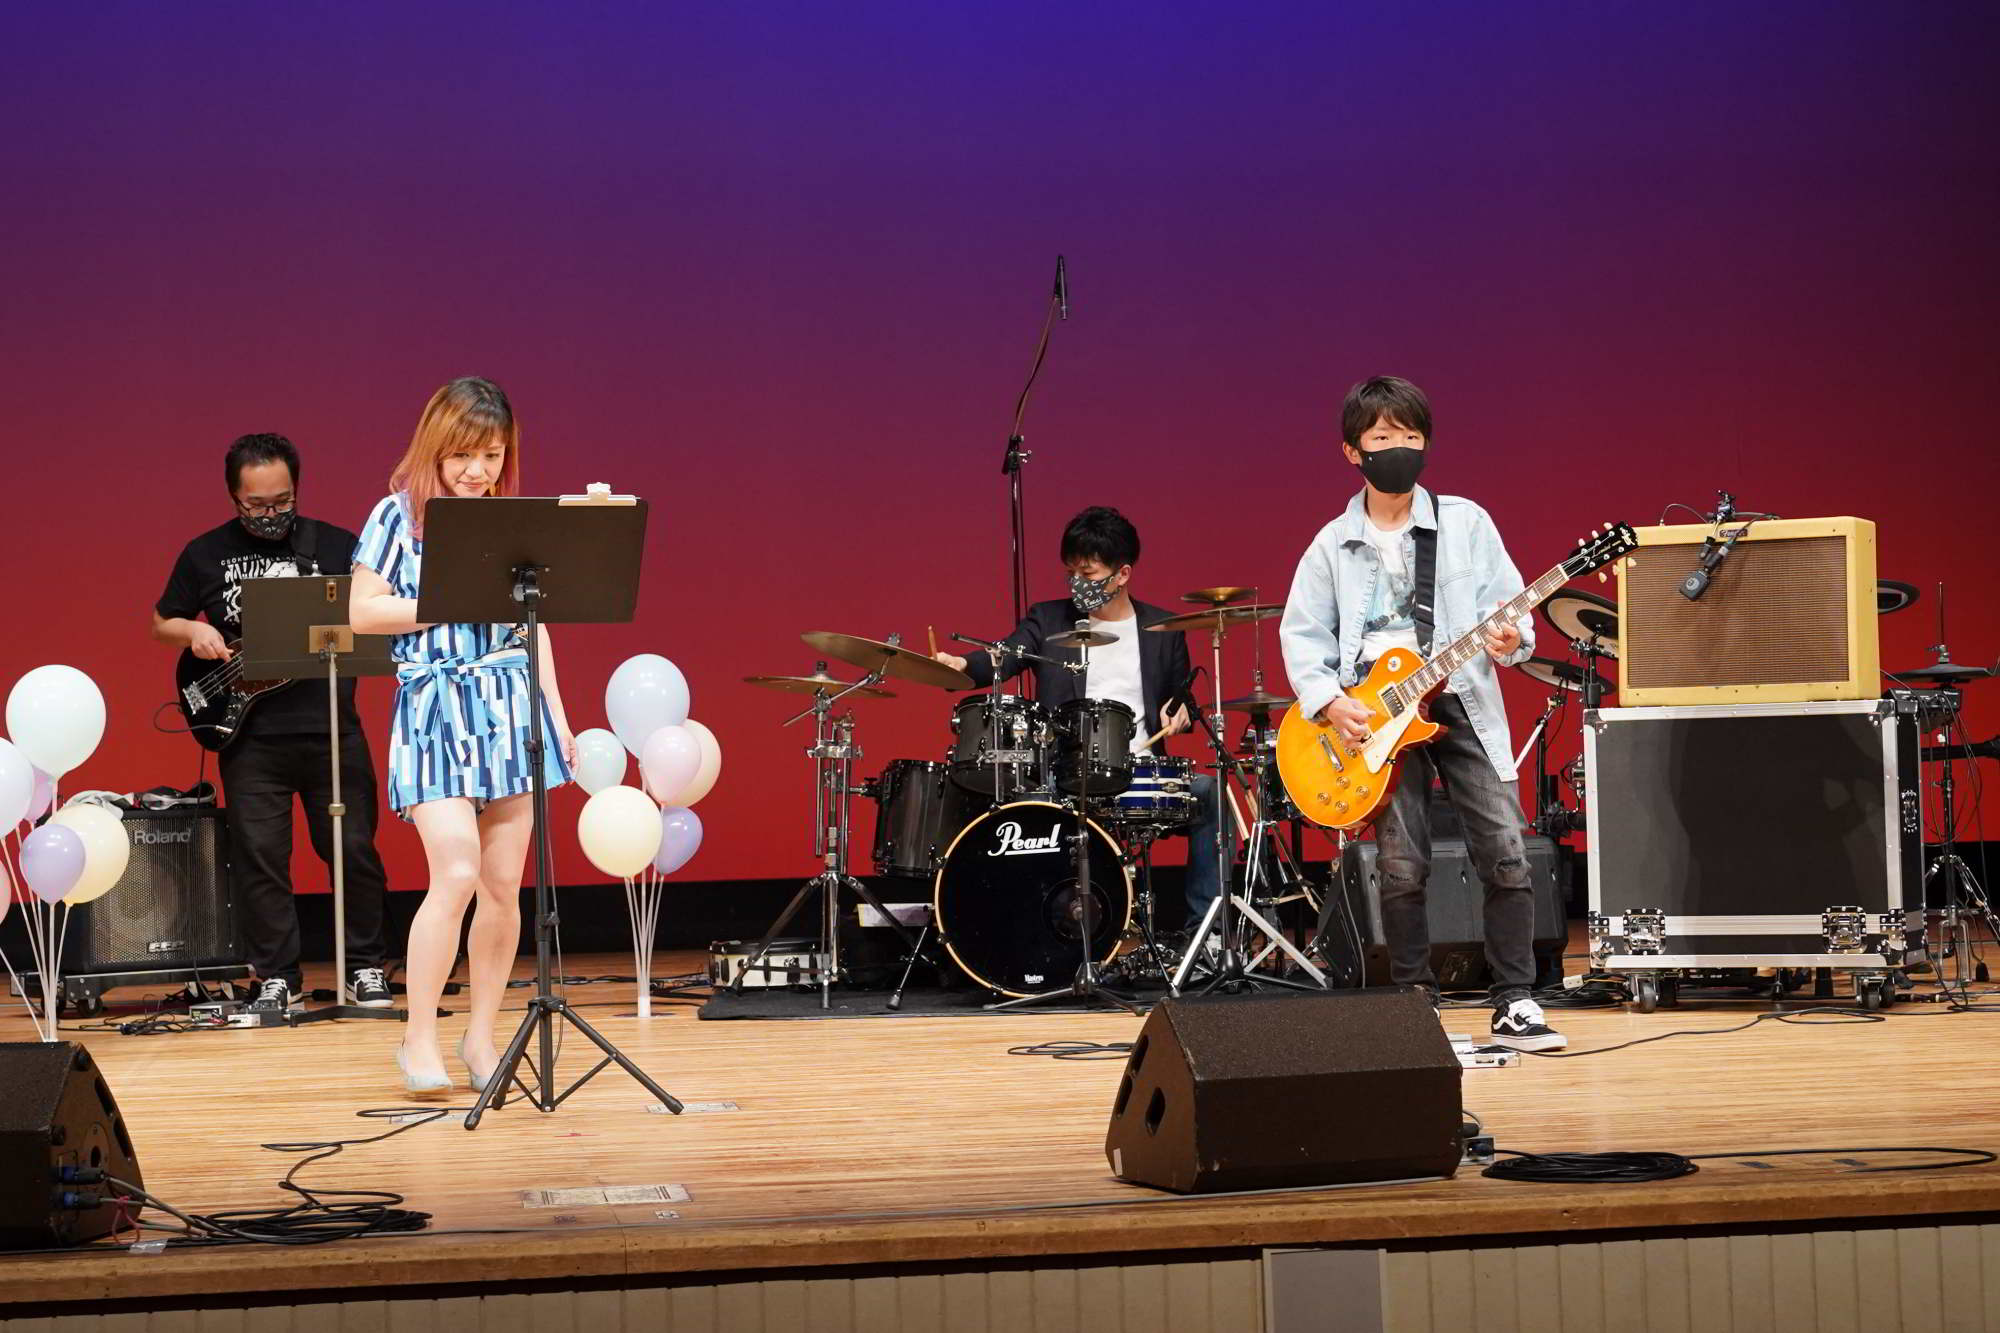 Fucciミュージックスクール音楽教室発表会中高生一般の演奏ステージ